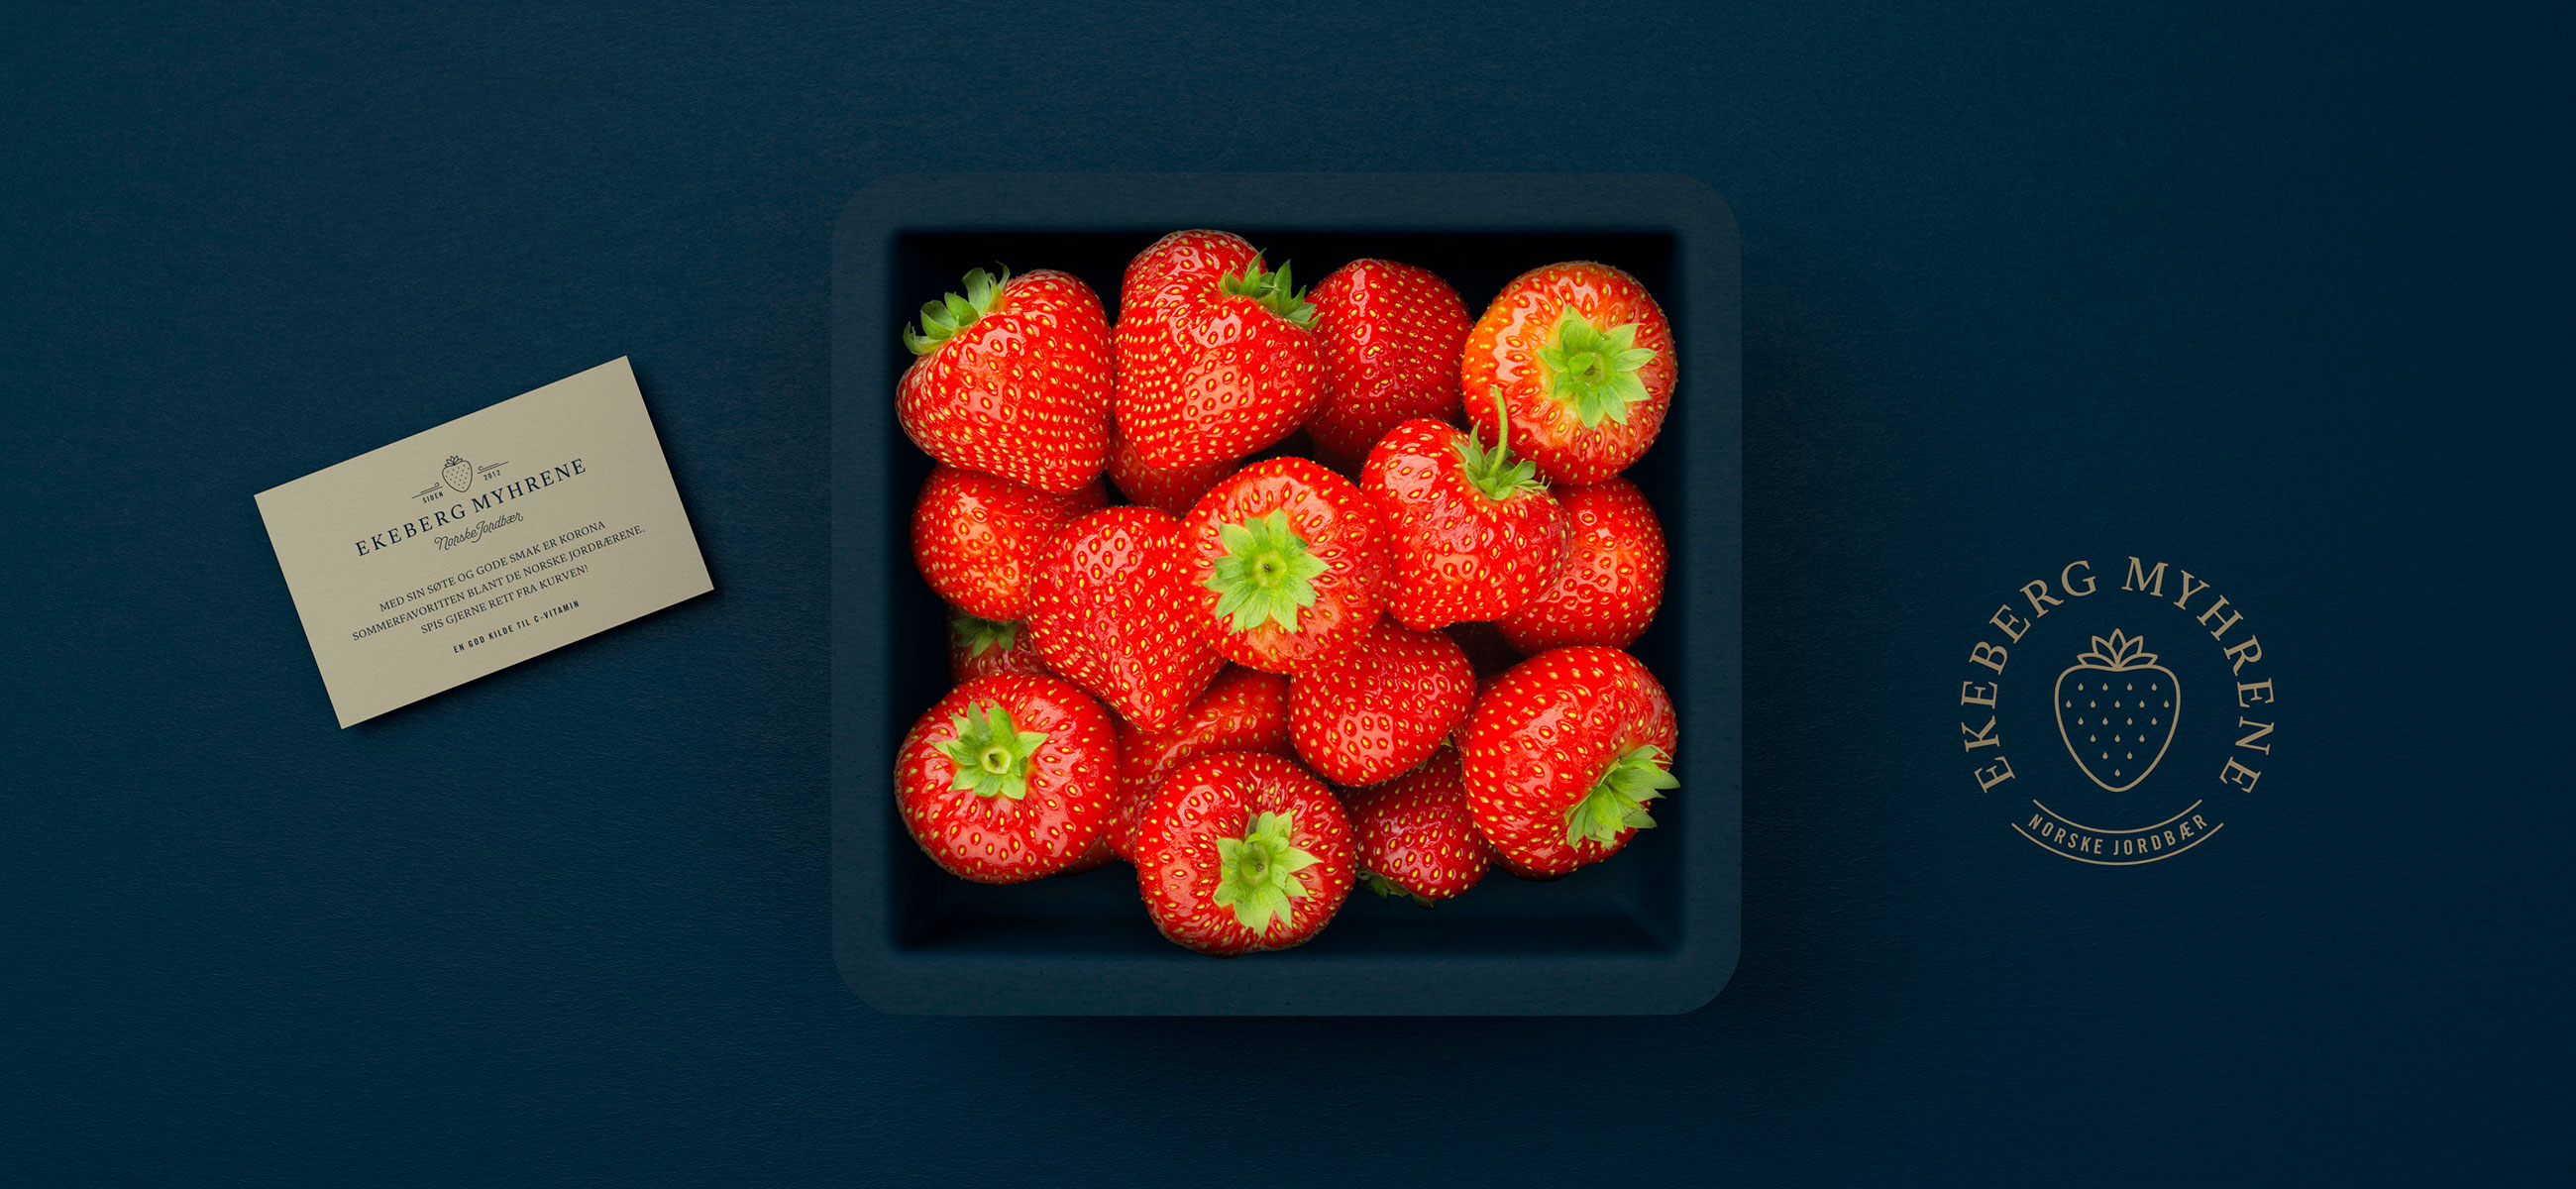 Ekeberg Myhrene norske jordbær norwegian strawberries. Emballasje packaging design.